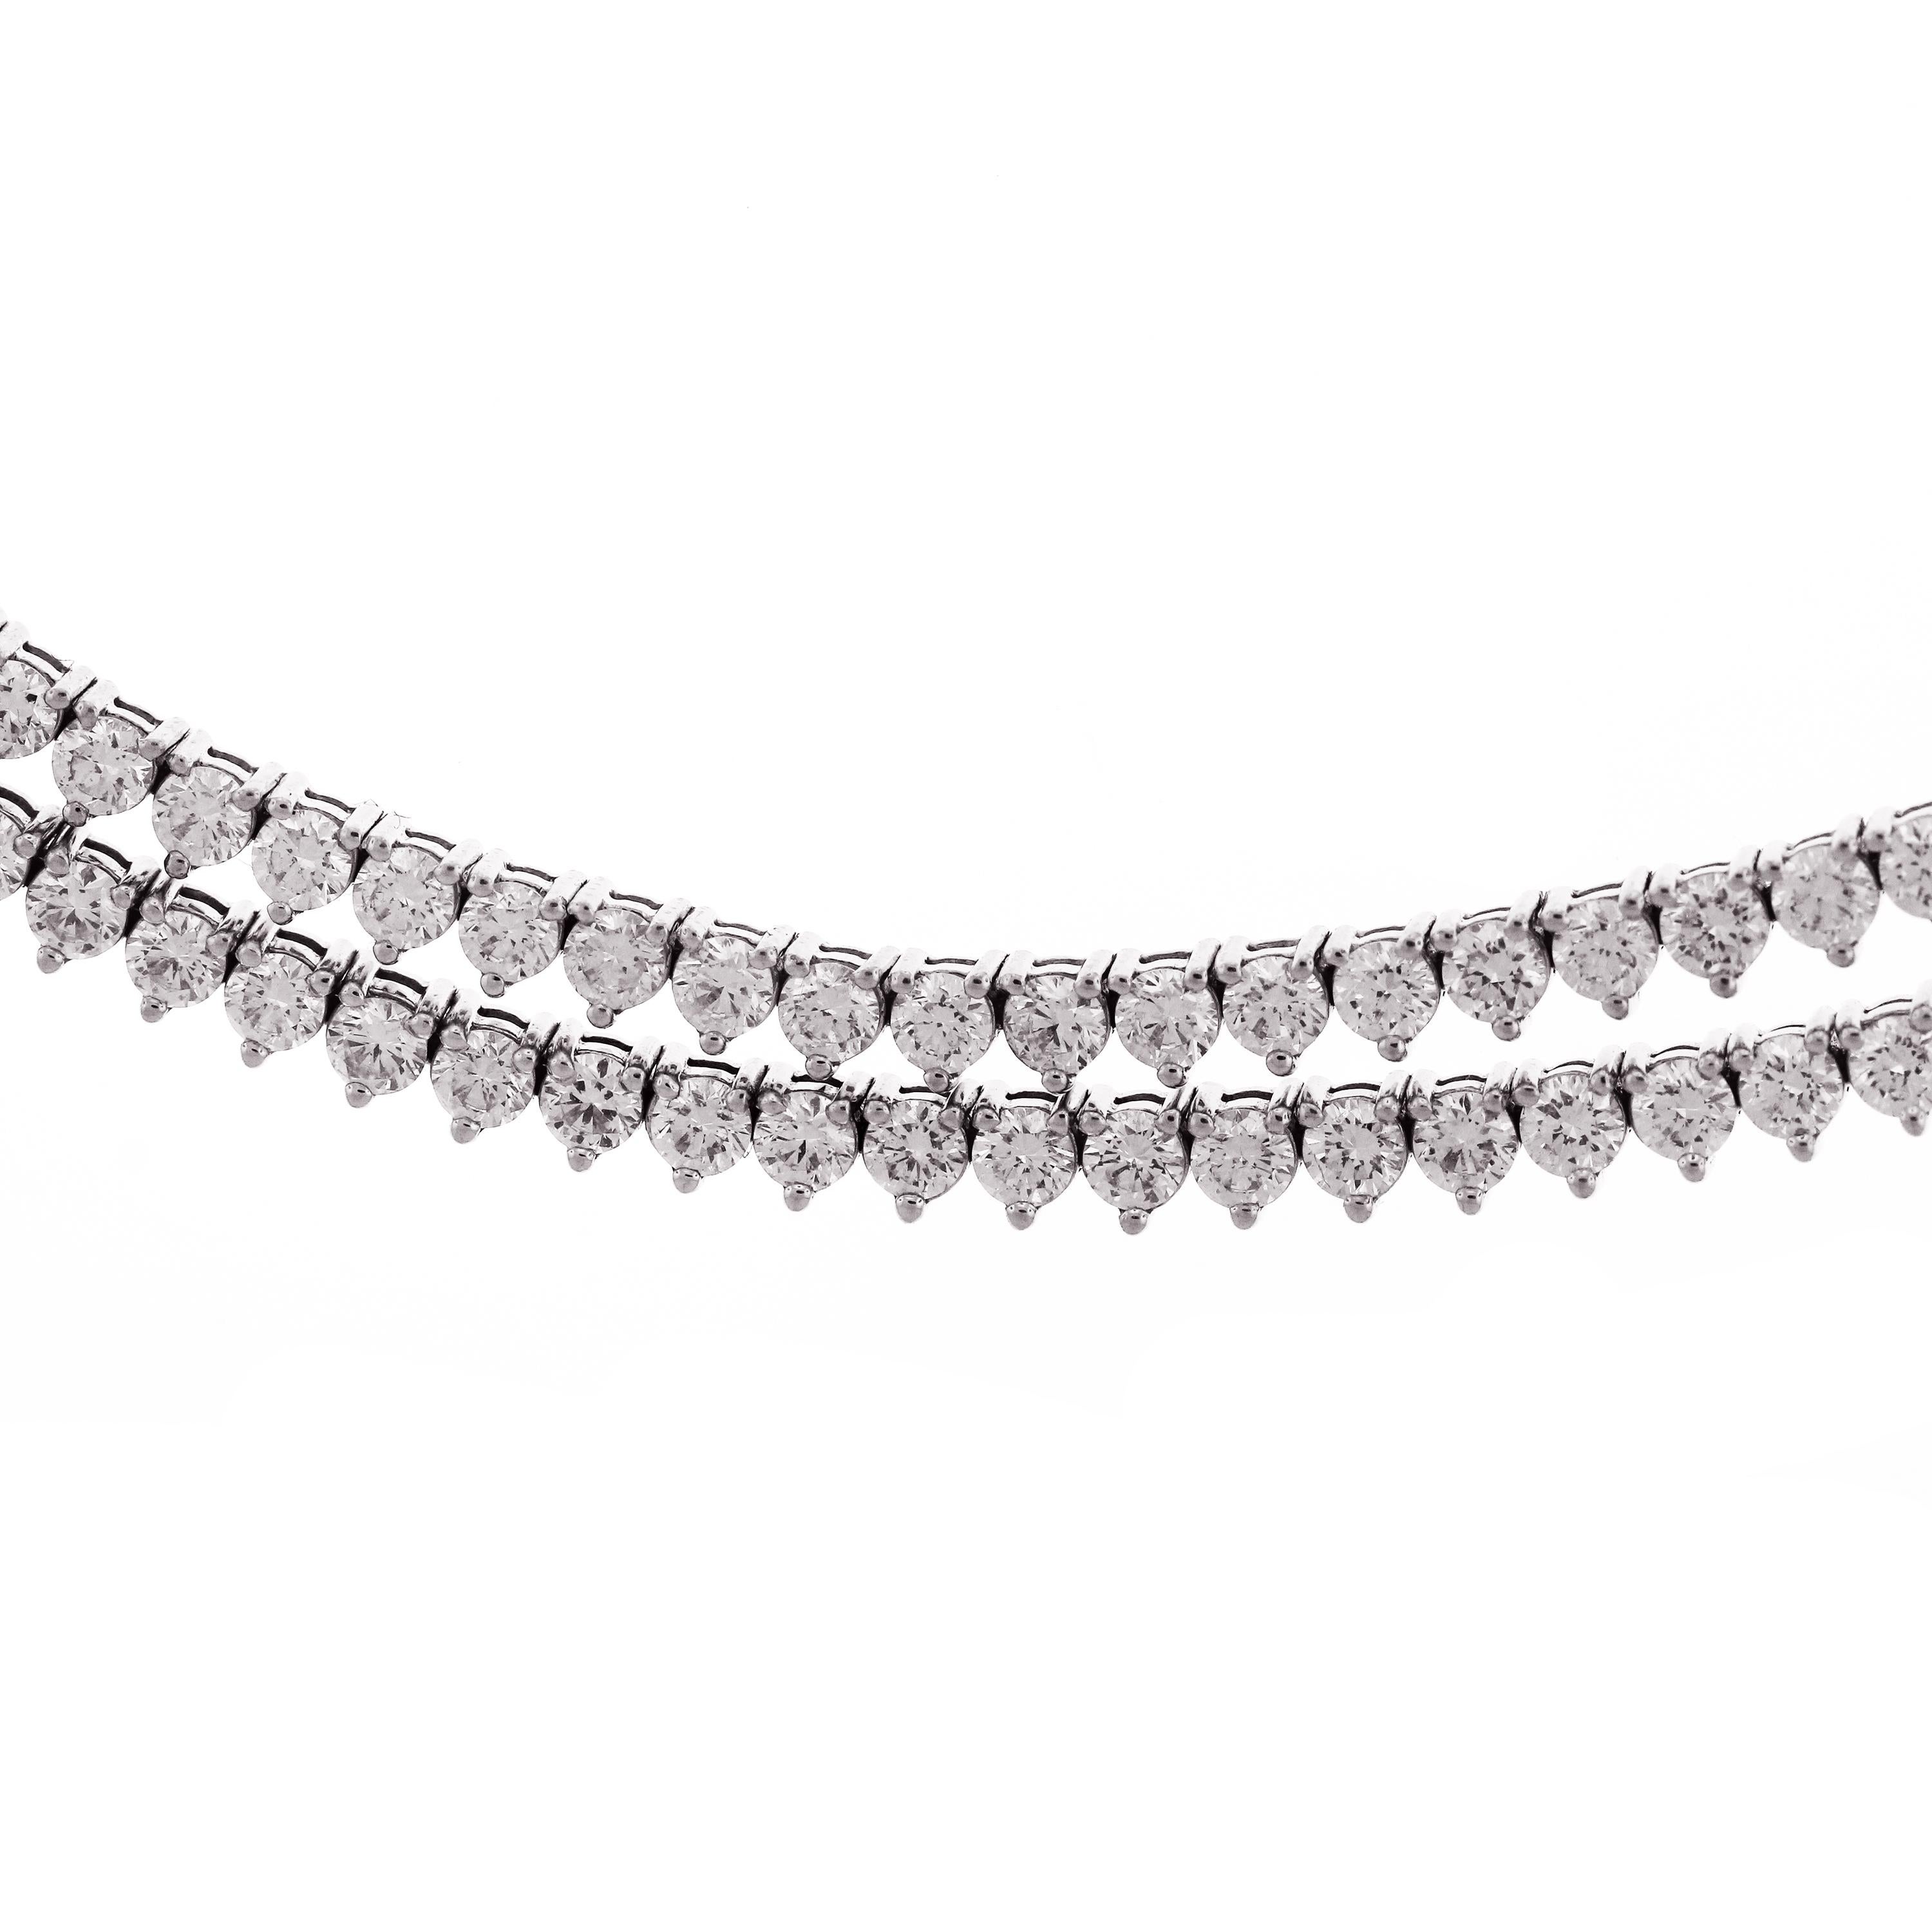 15 inch diamond tennis necklace